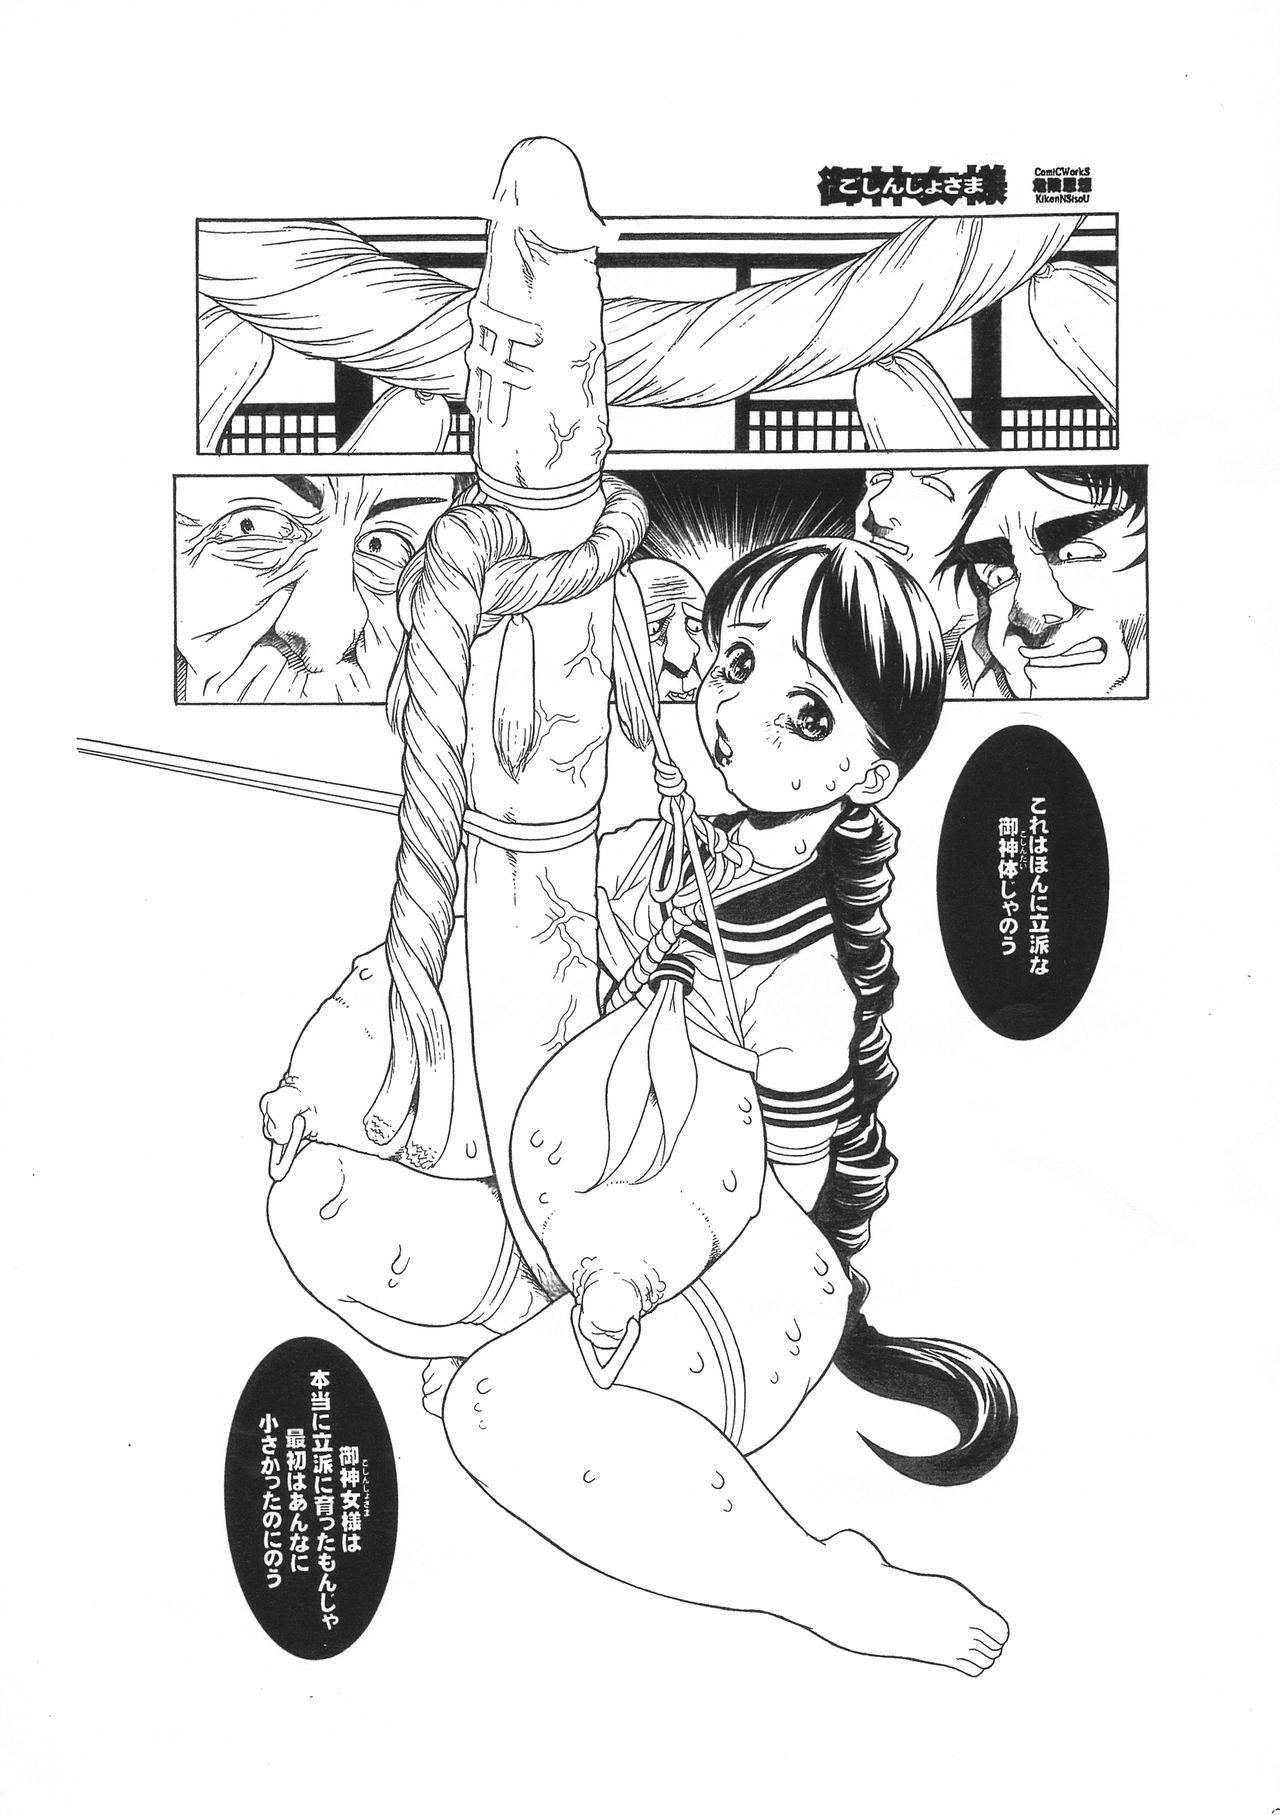 Pigtails Ishin - Hikaru no go Art - Page 8